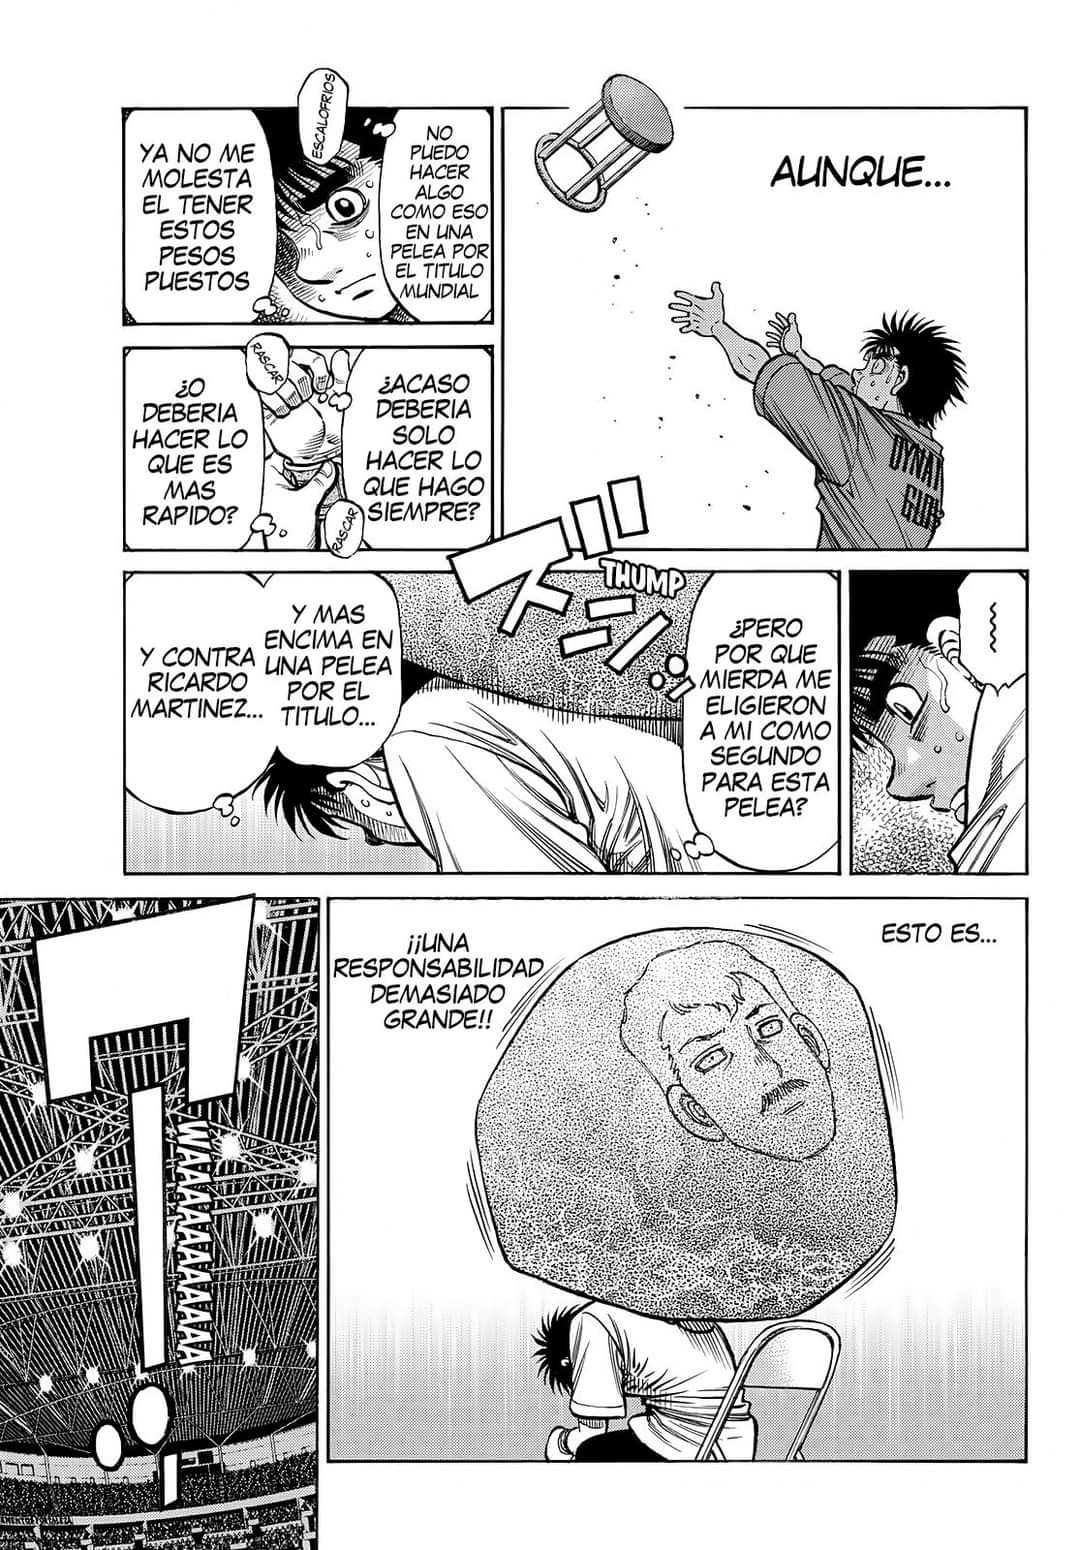 Hajime no Ippo Manga 1395 Español AnimeAllStar / Manga Online